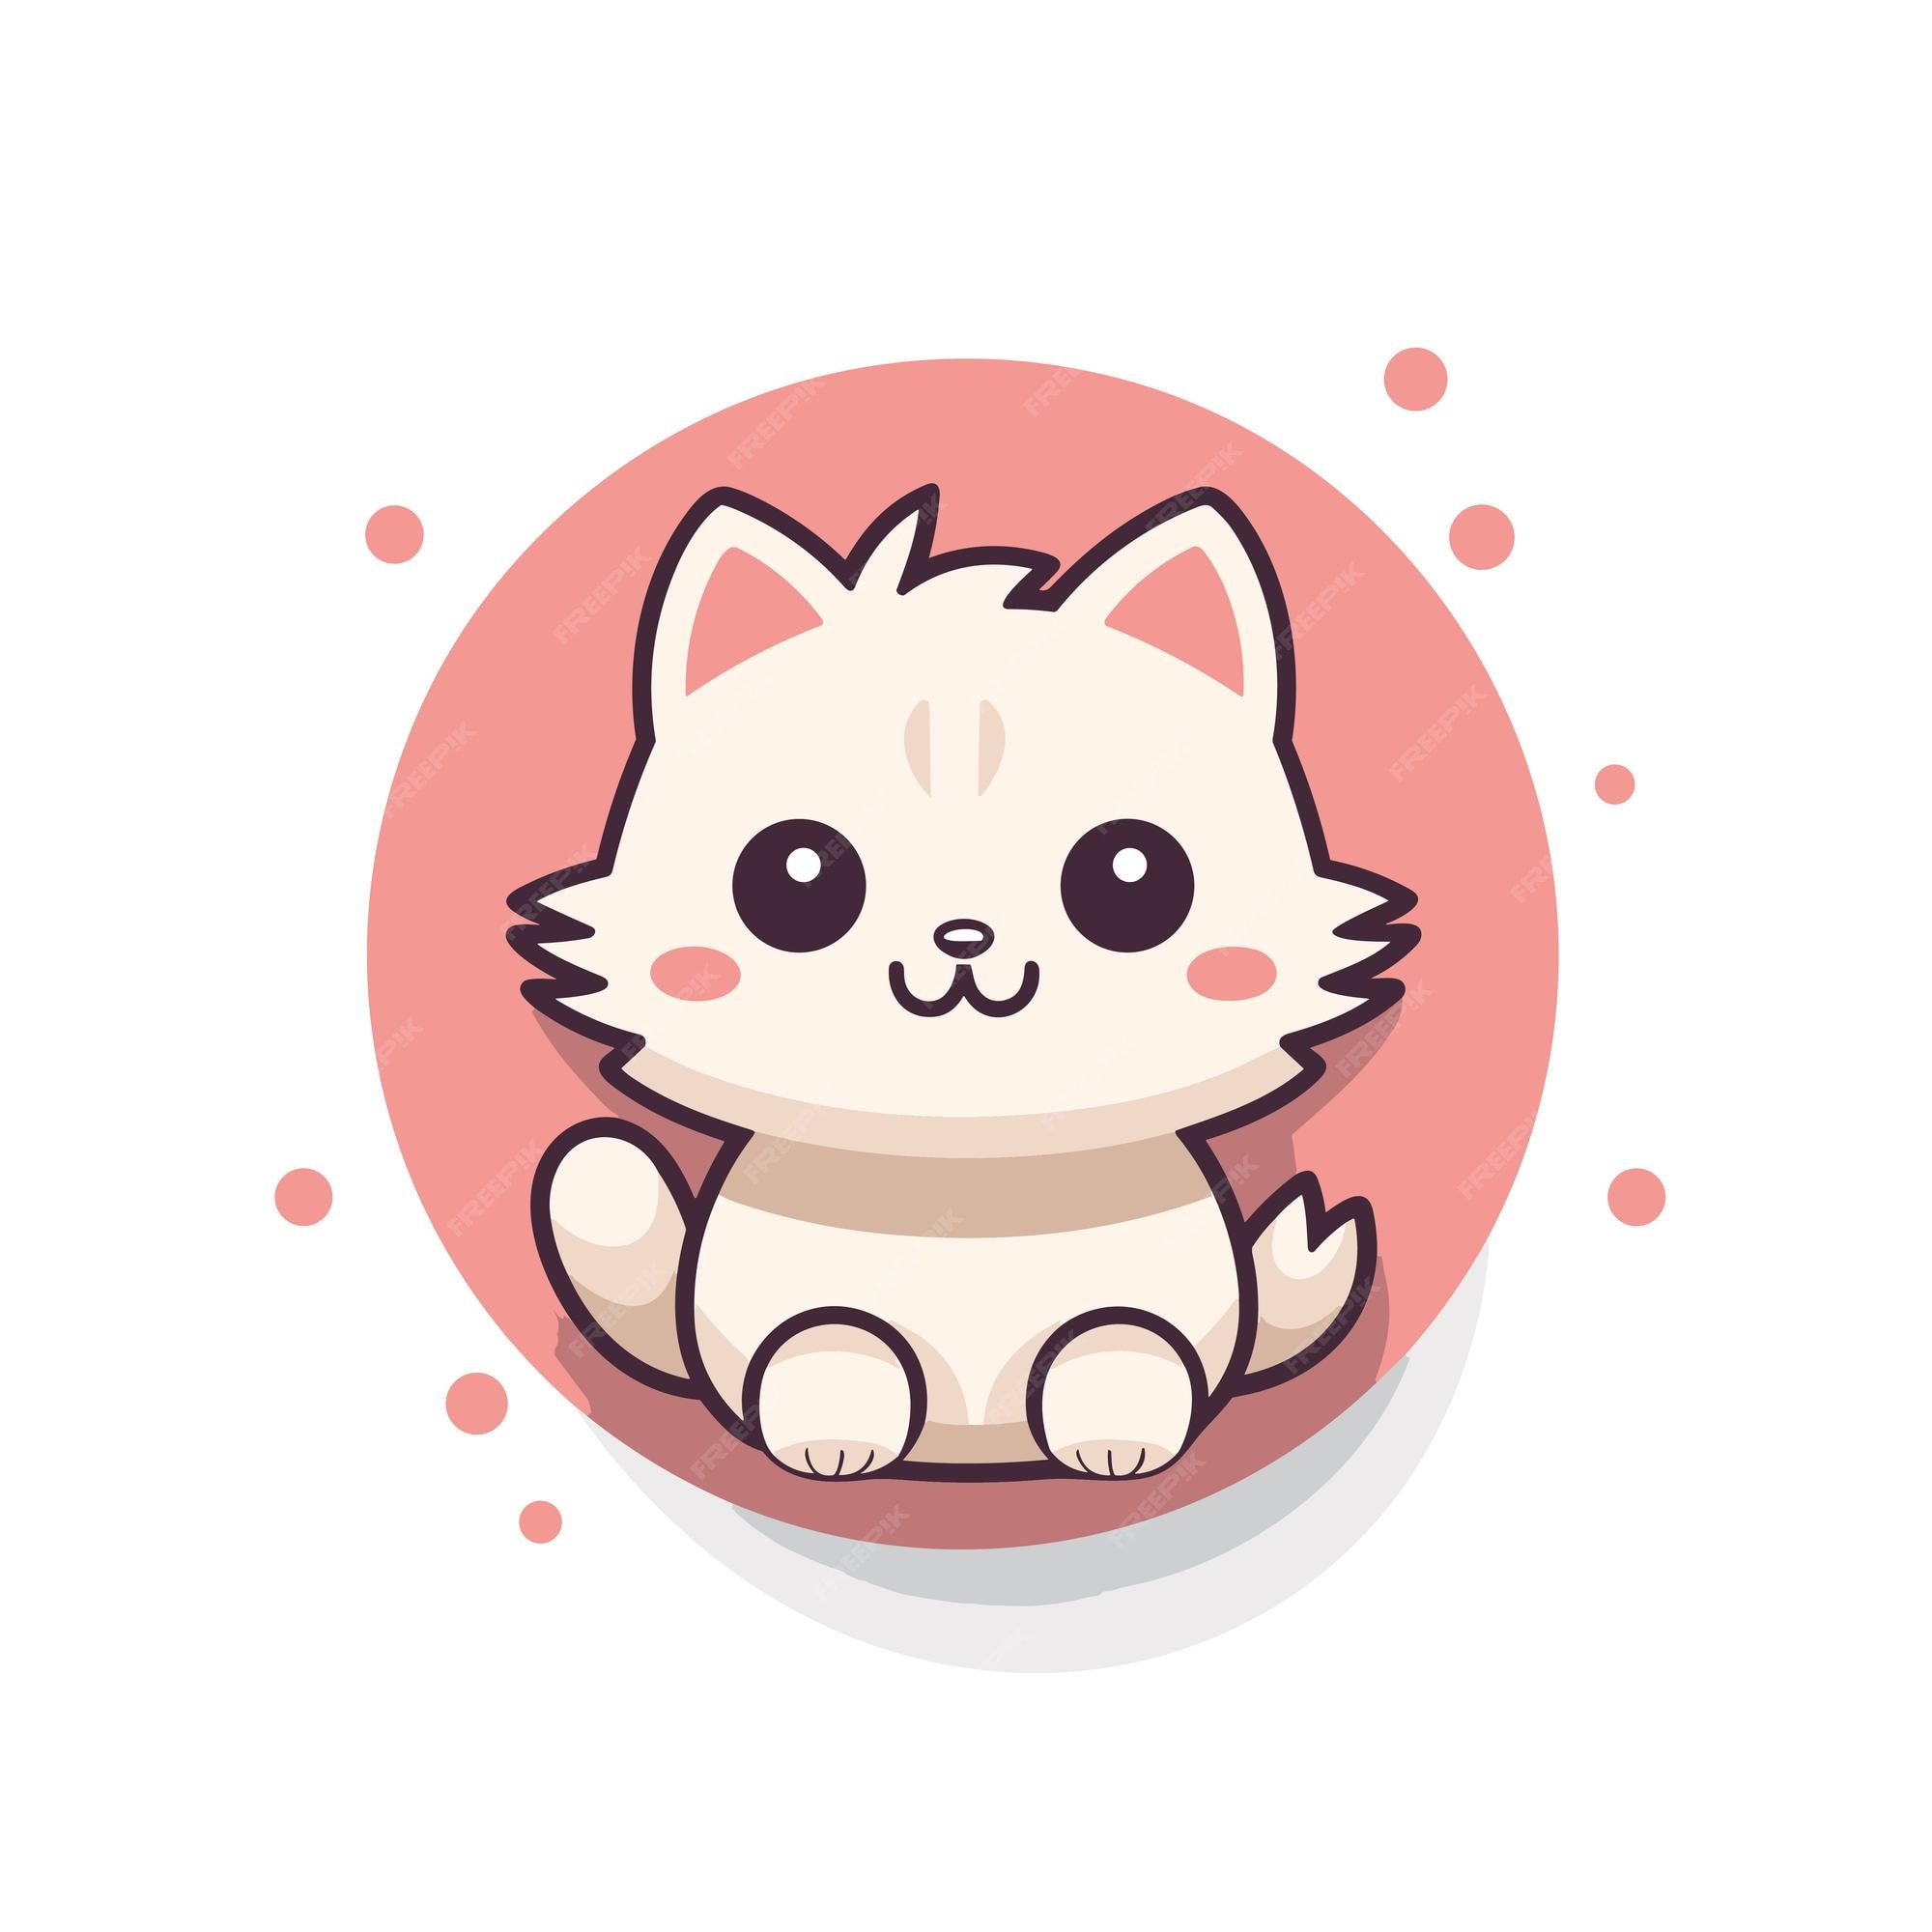 Premium Vector  Sweet feline a pink kawaii cartoon cat icon with